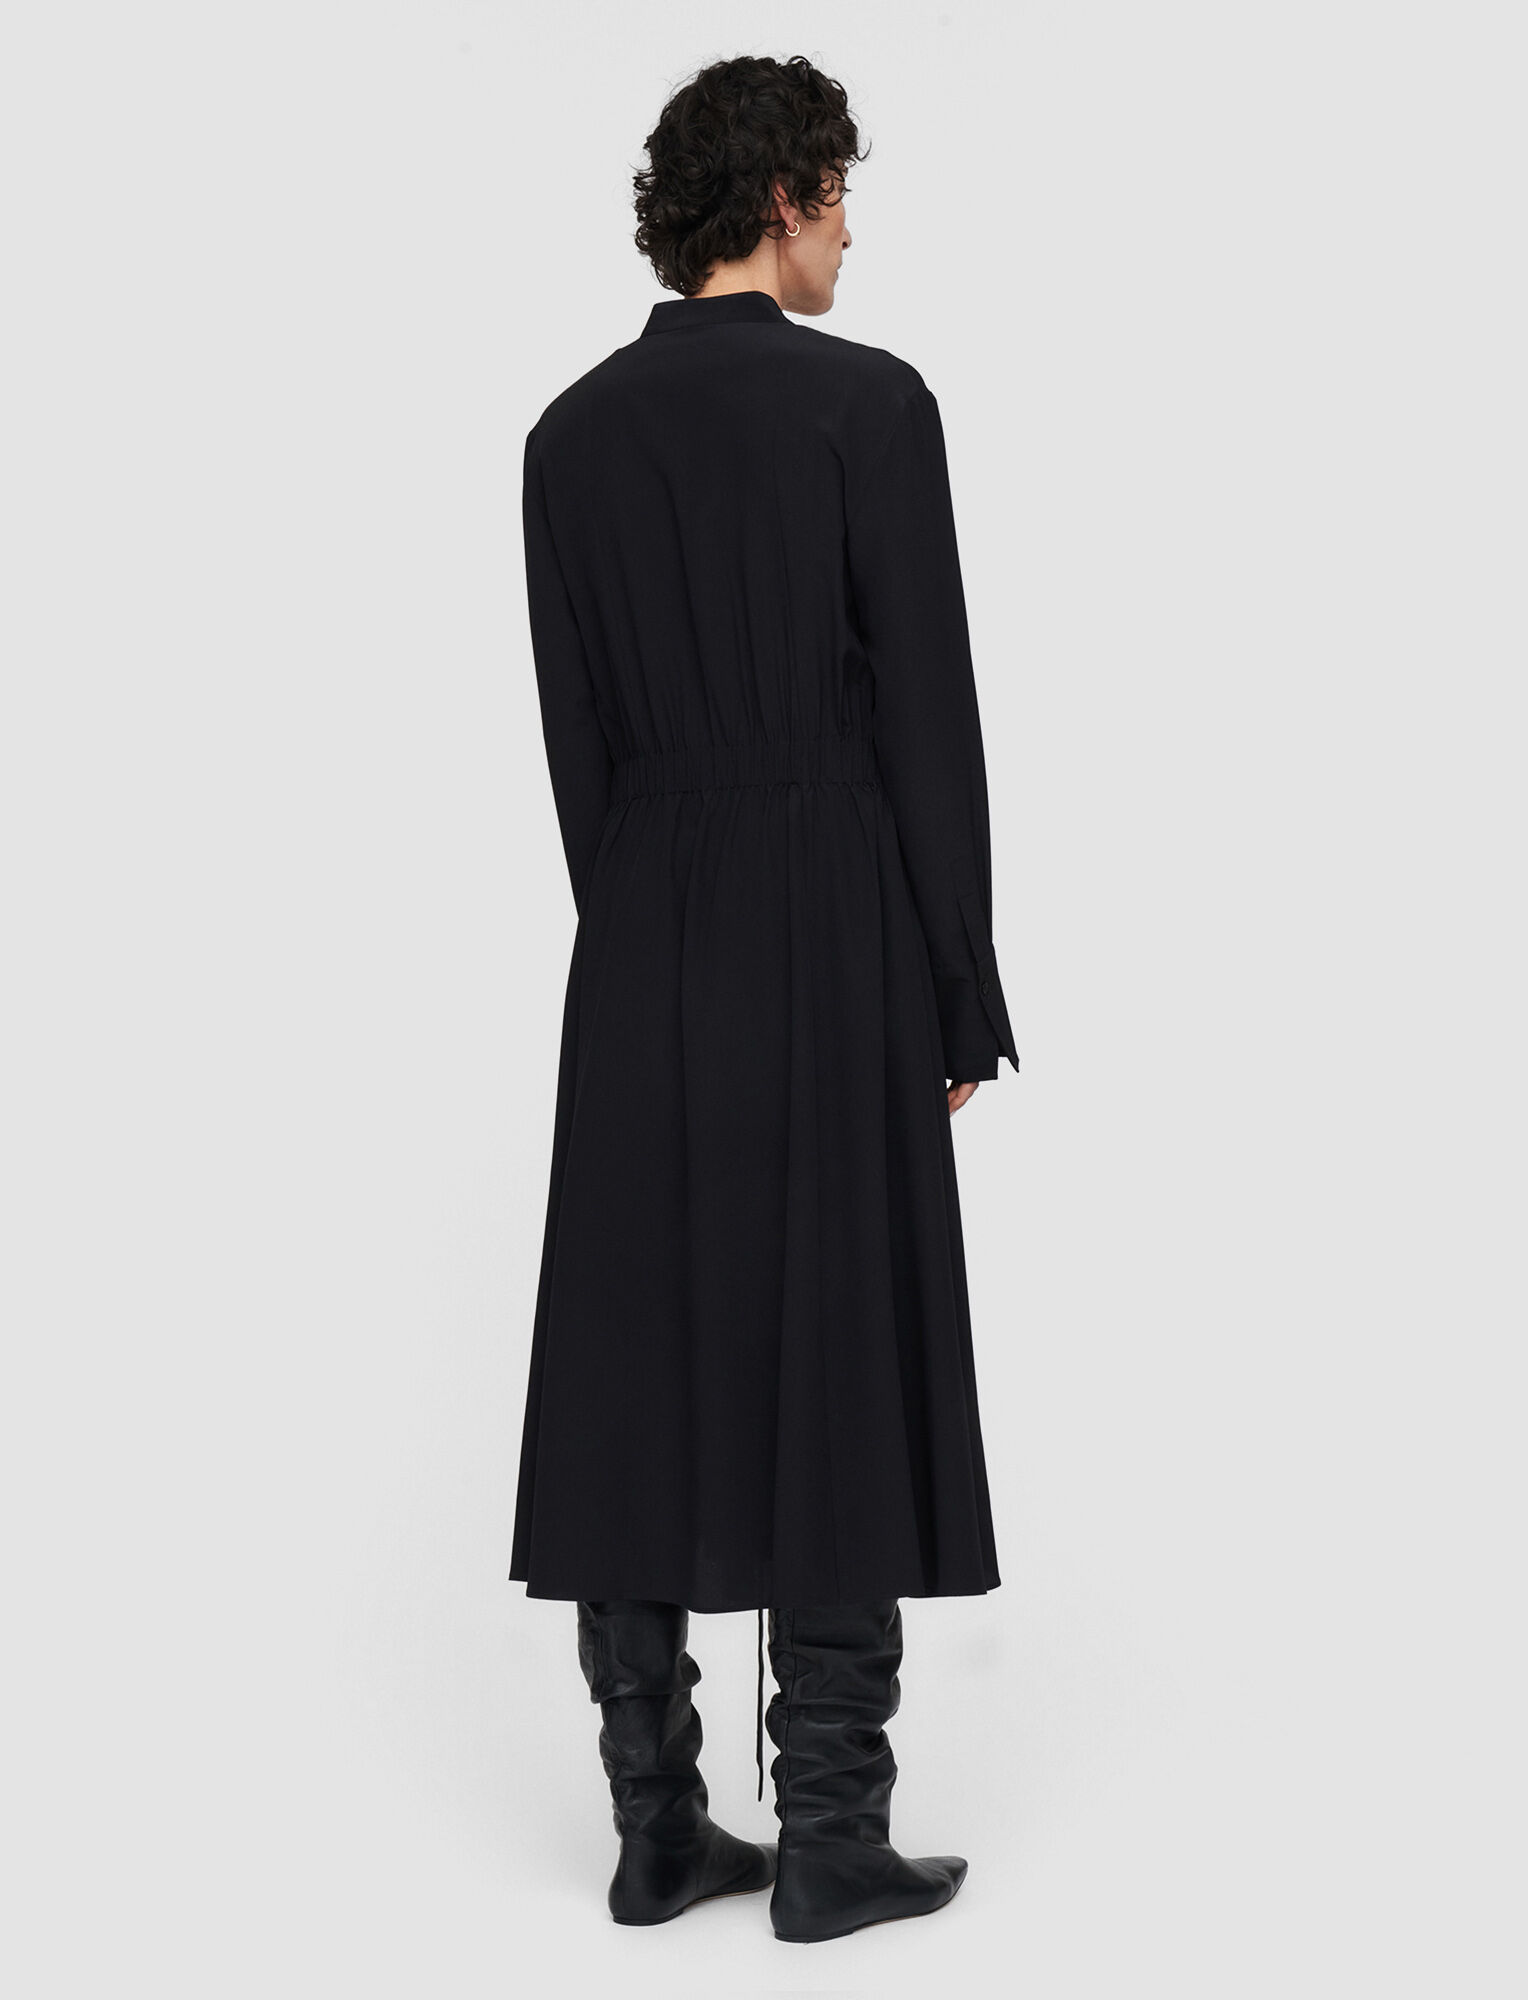 Joseph, Silk Crepe de Chine Fairbaim Dress, in Black